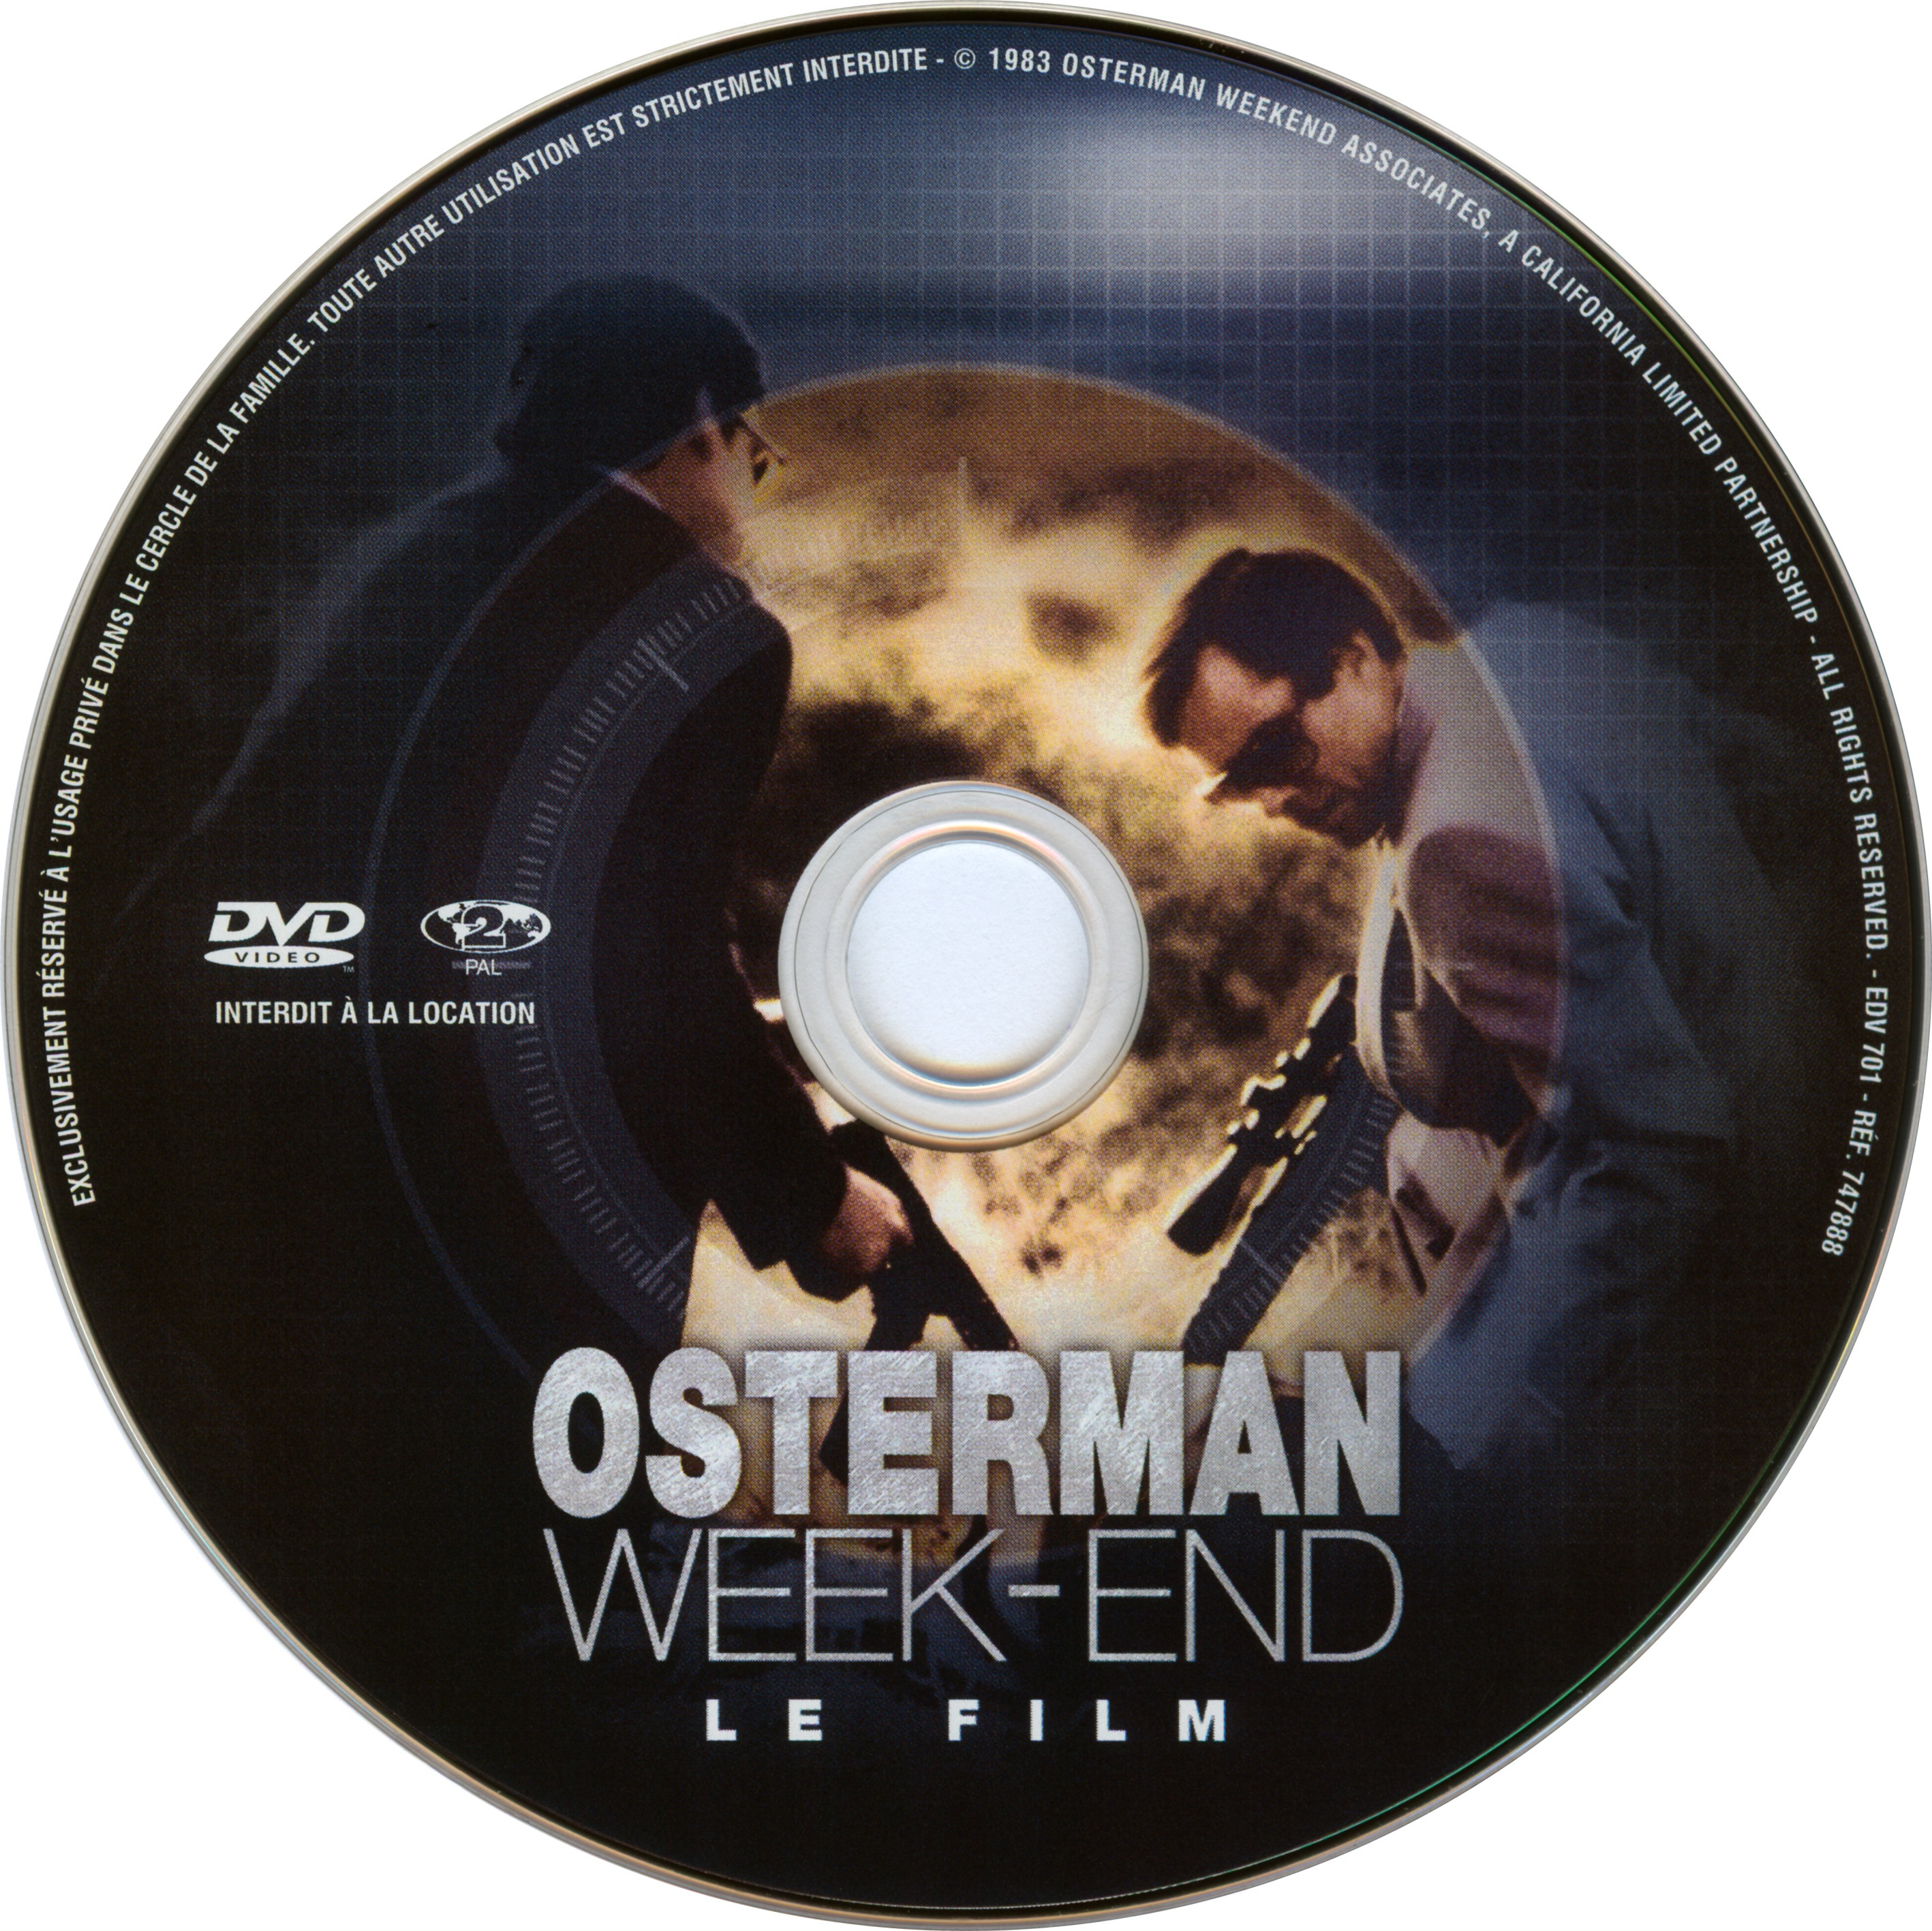 Osterman Week-End DISC 1